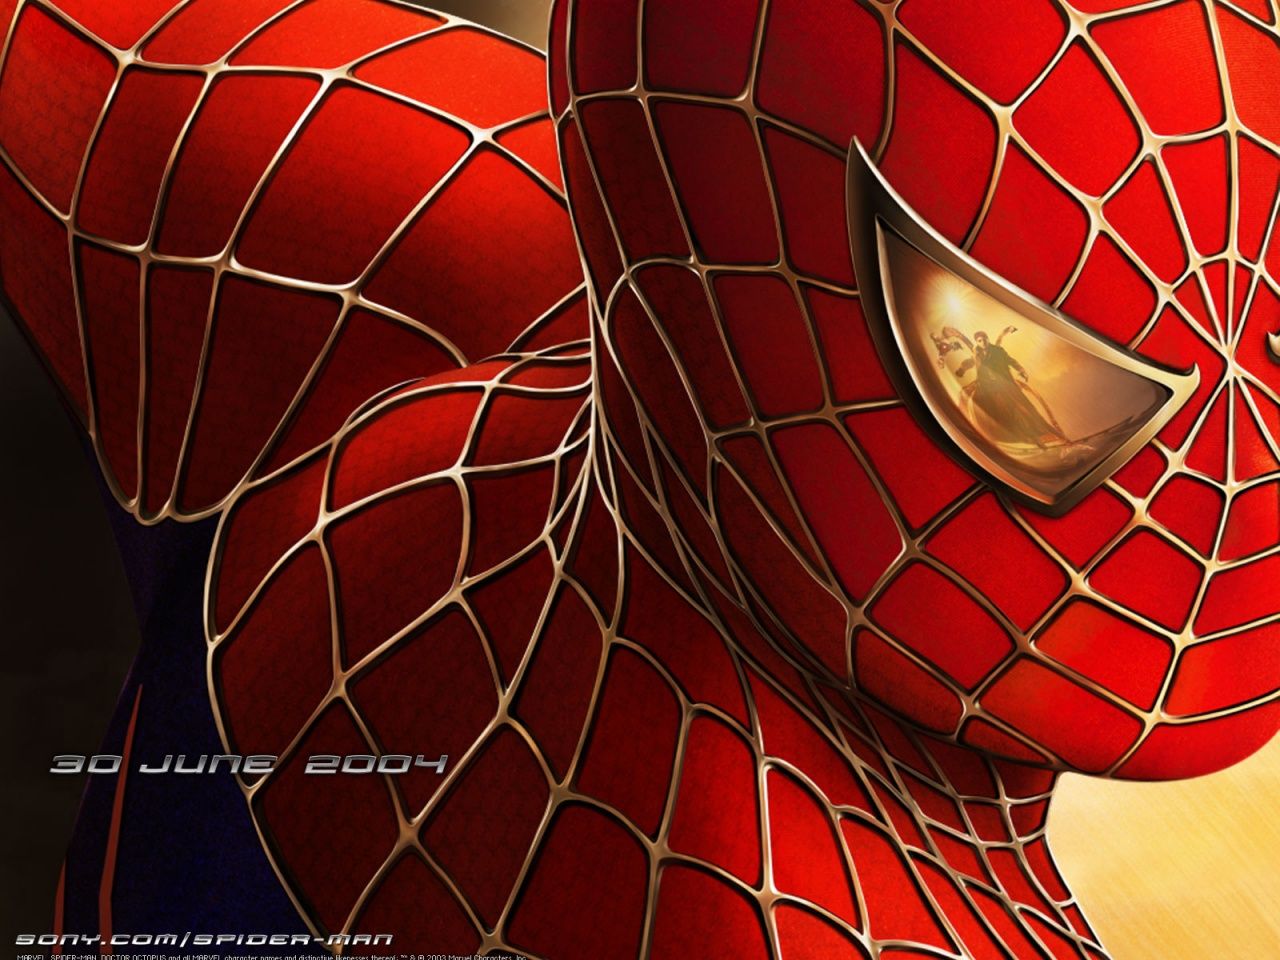 Spiderman face wallpaper. Spiderman face